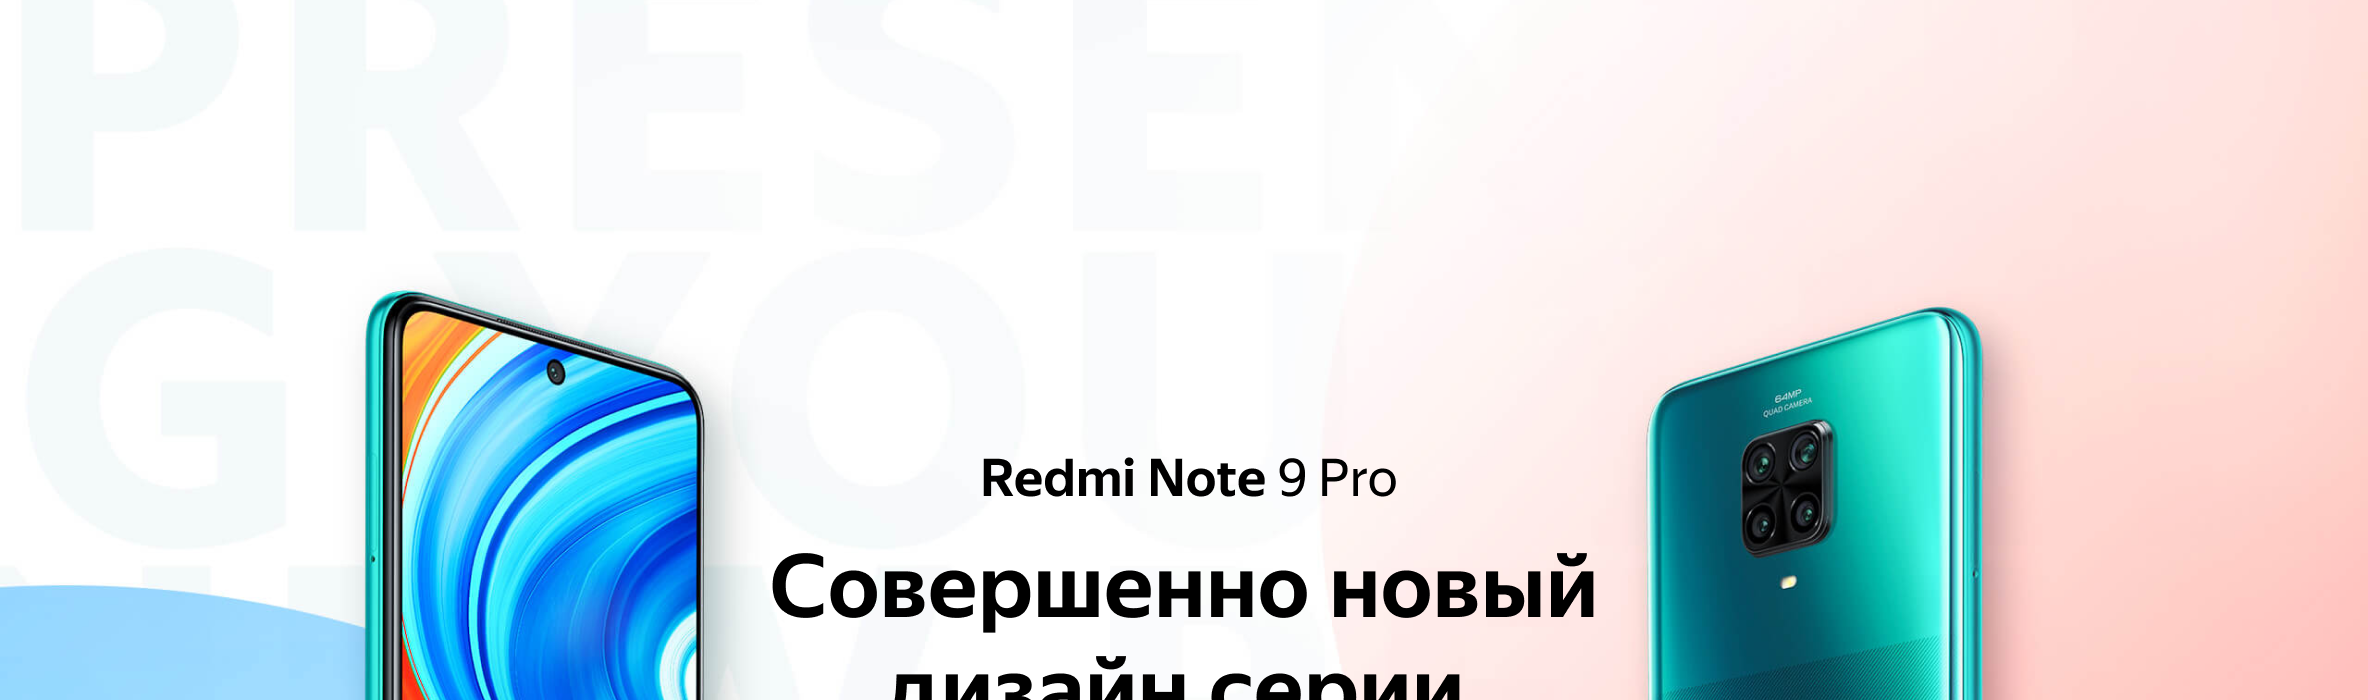 Смартфон Redmi Note 9 Pro 6/128 Gb white - paragraf.uz